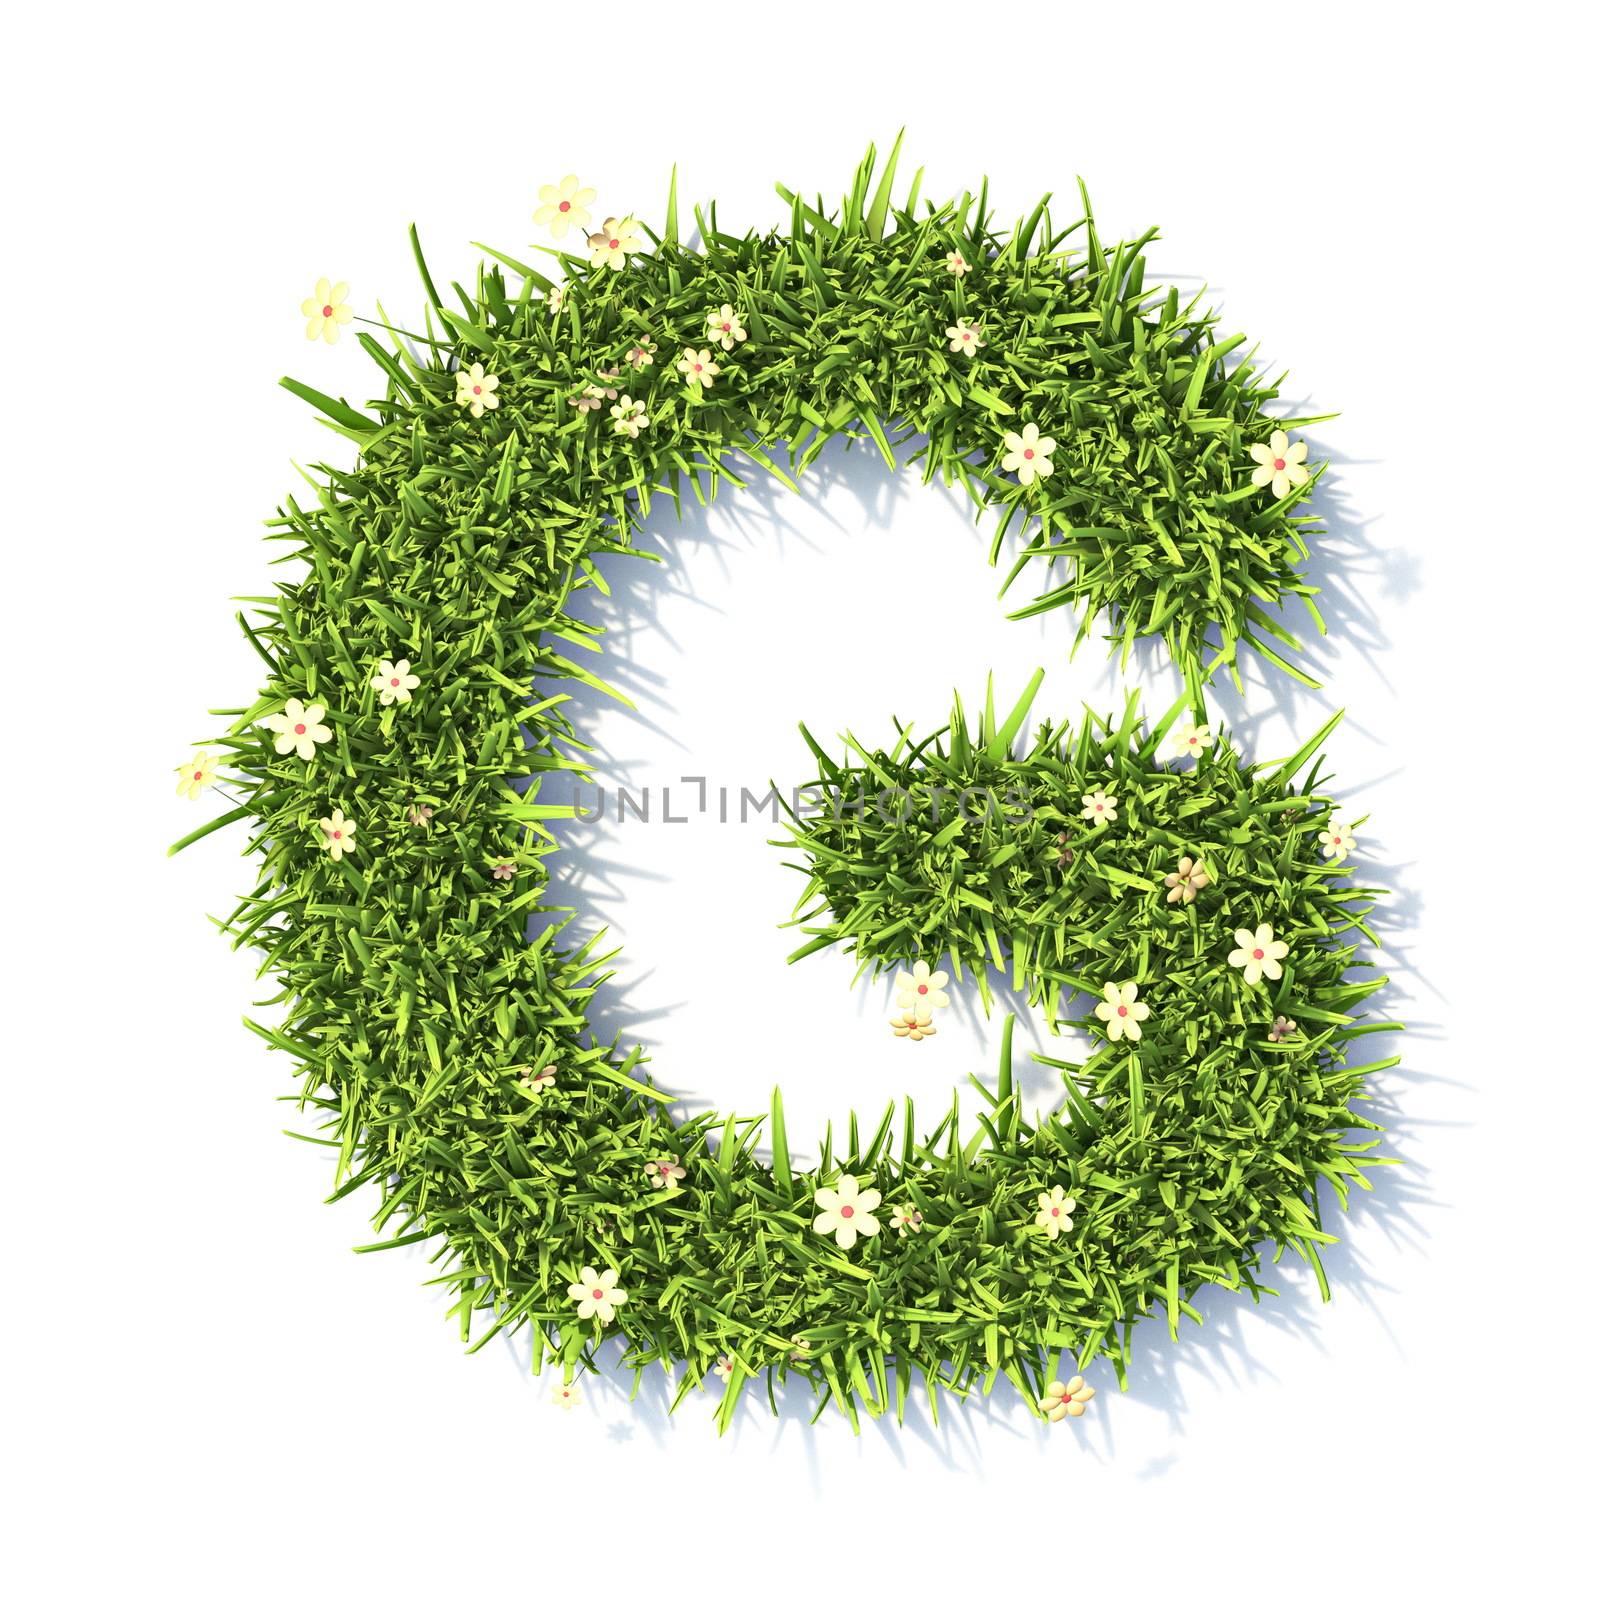 Grass font Letter G 3D rendering illustration isolated on white background